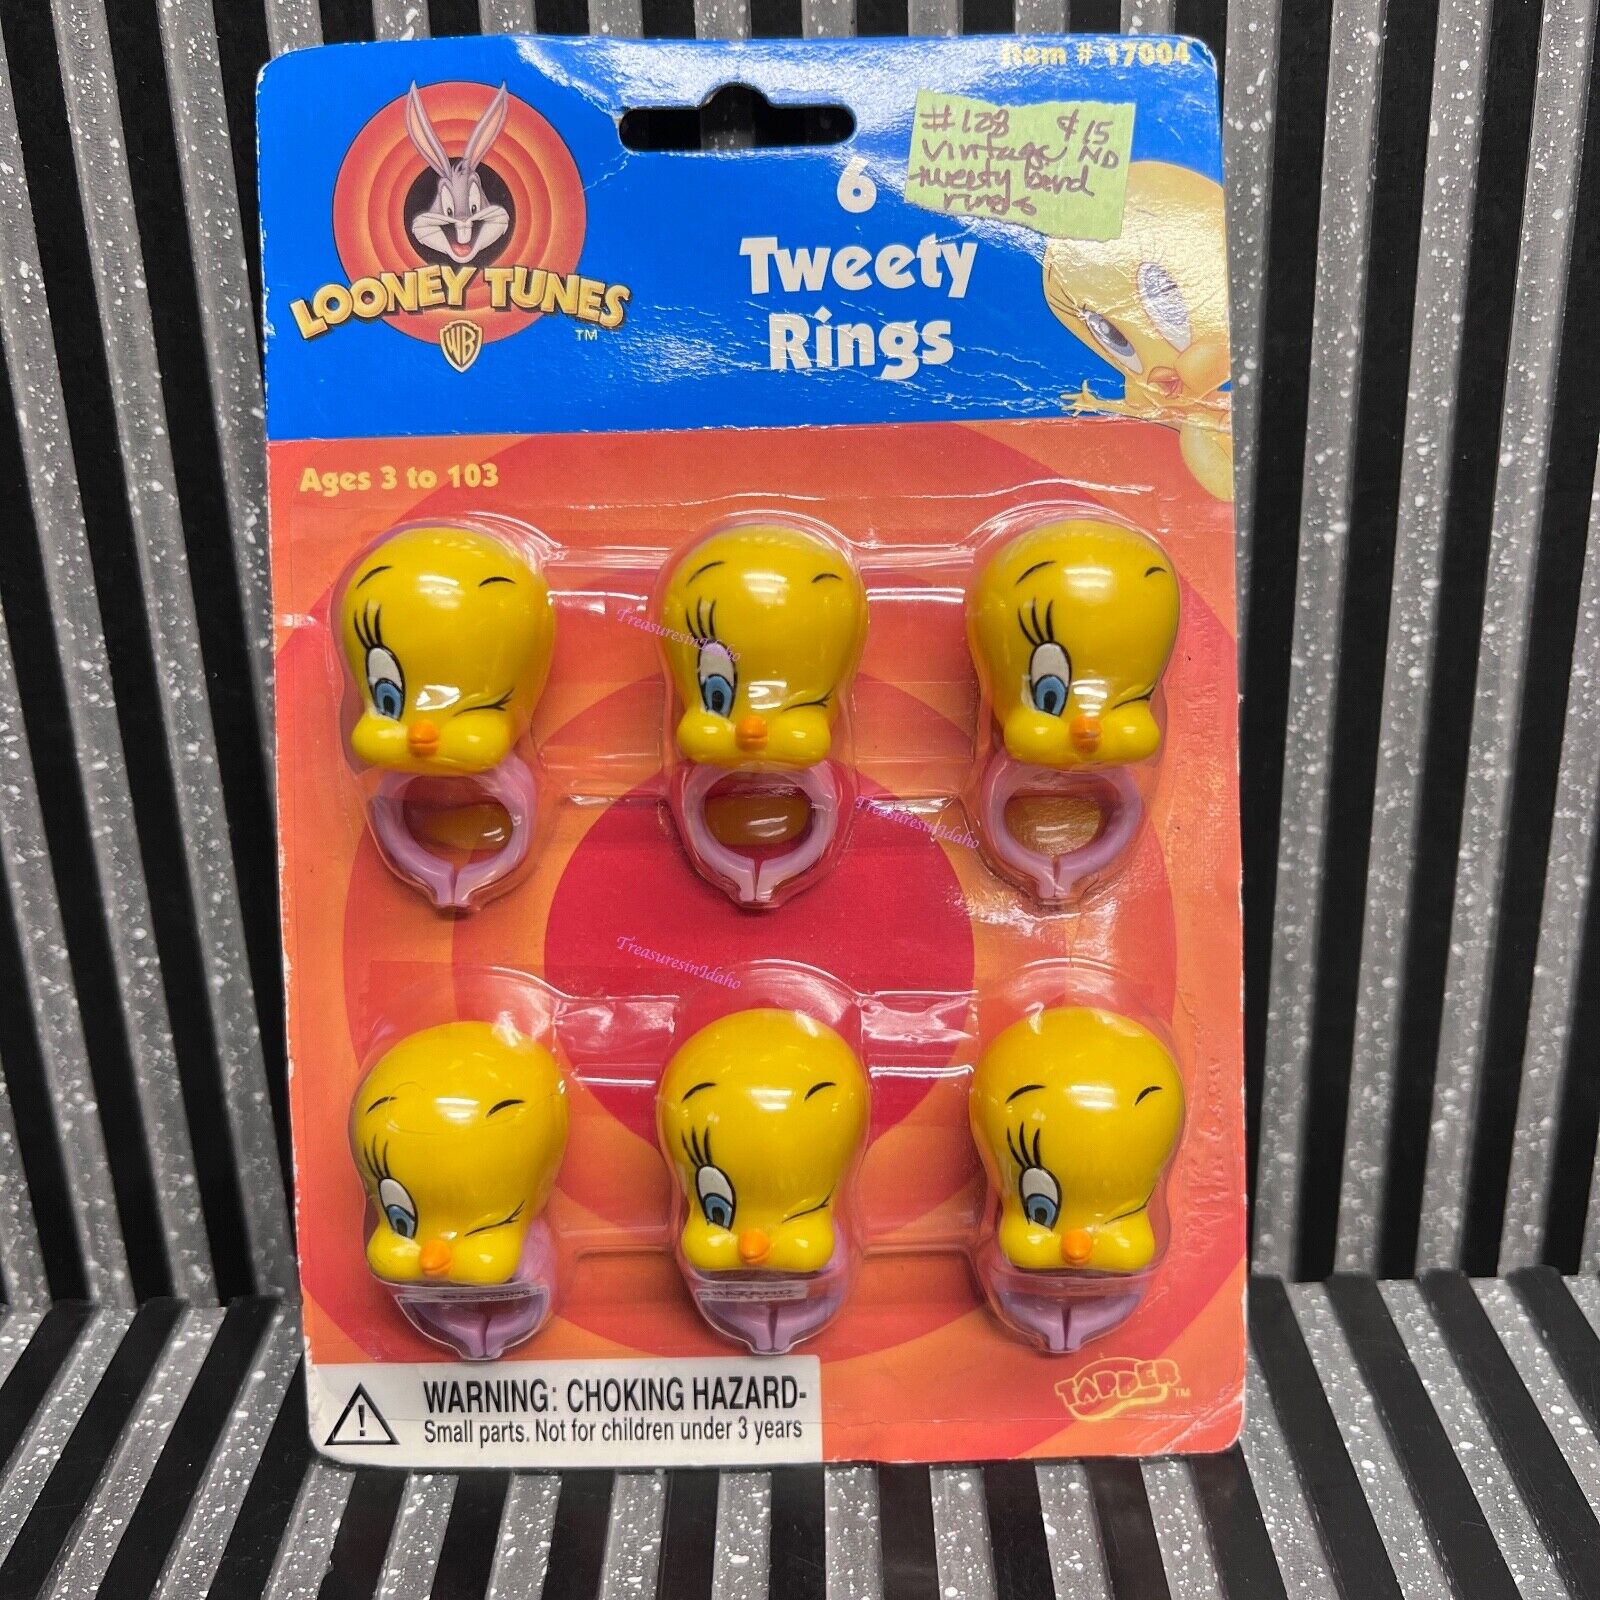 Looney Tunes 1999 Tweety Bird Rings Party Favors Goody Bag Fillers 1-Pack 6 Toy